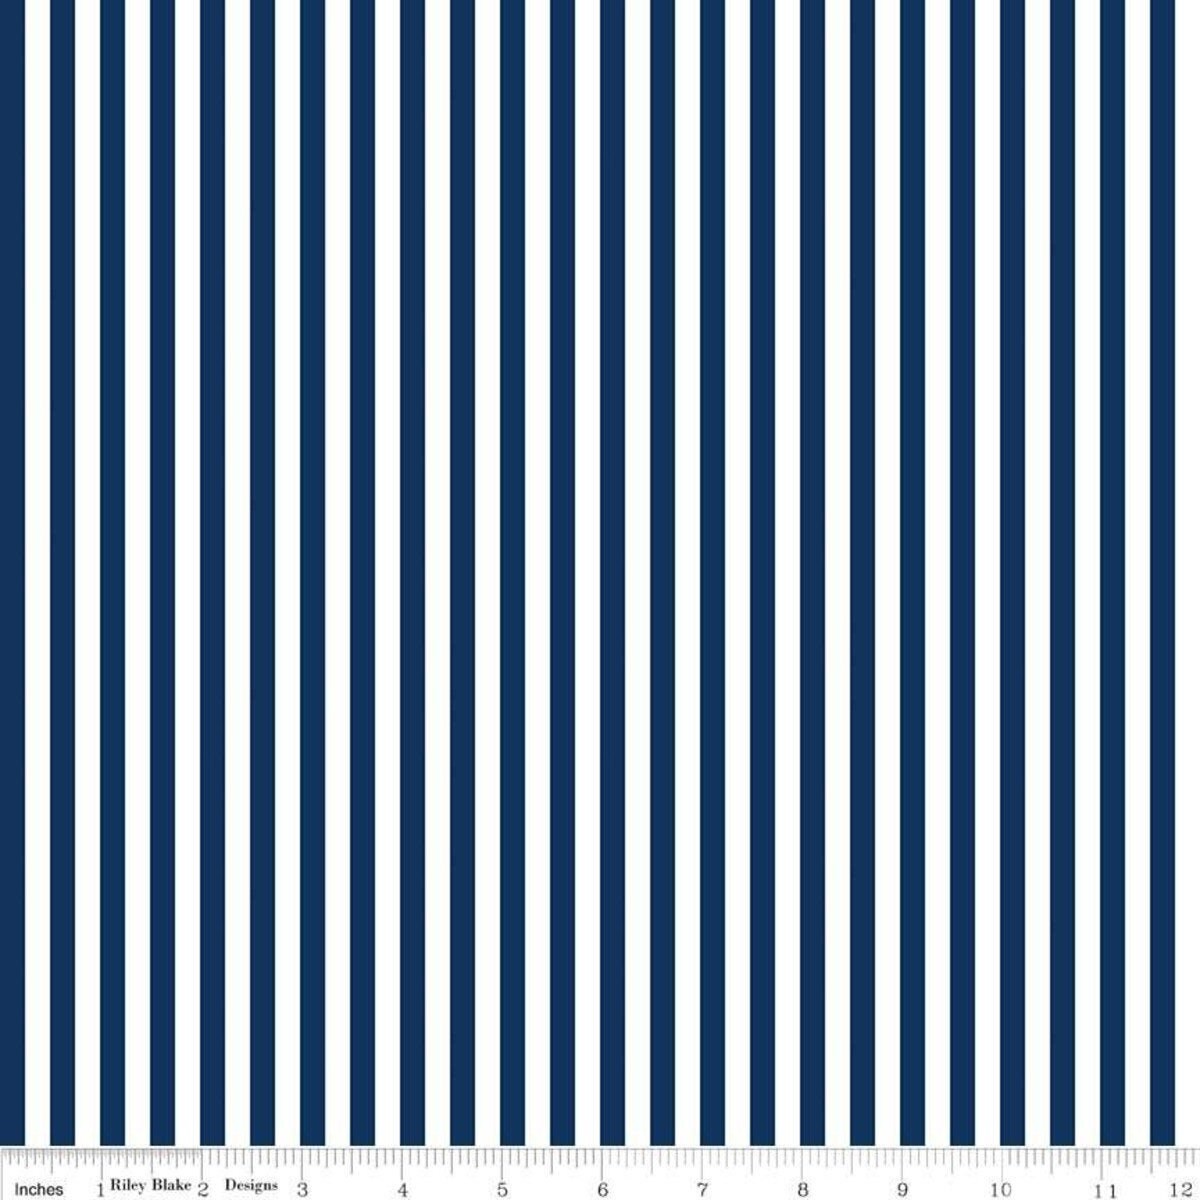 Navy 1/4 Stripe by Riley Blake Designs